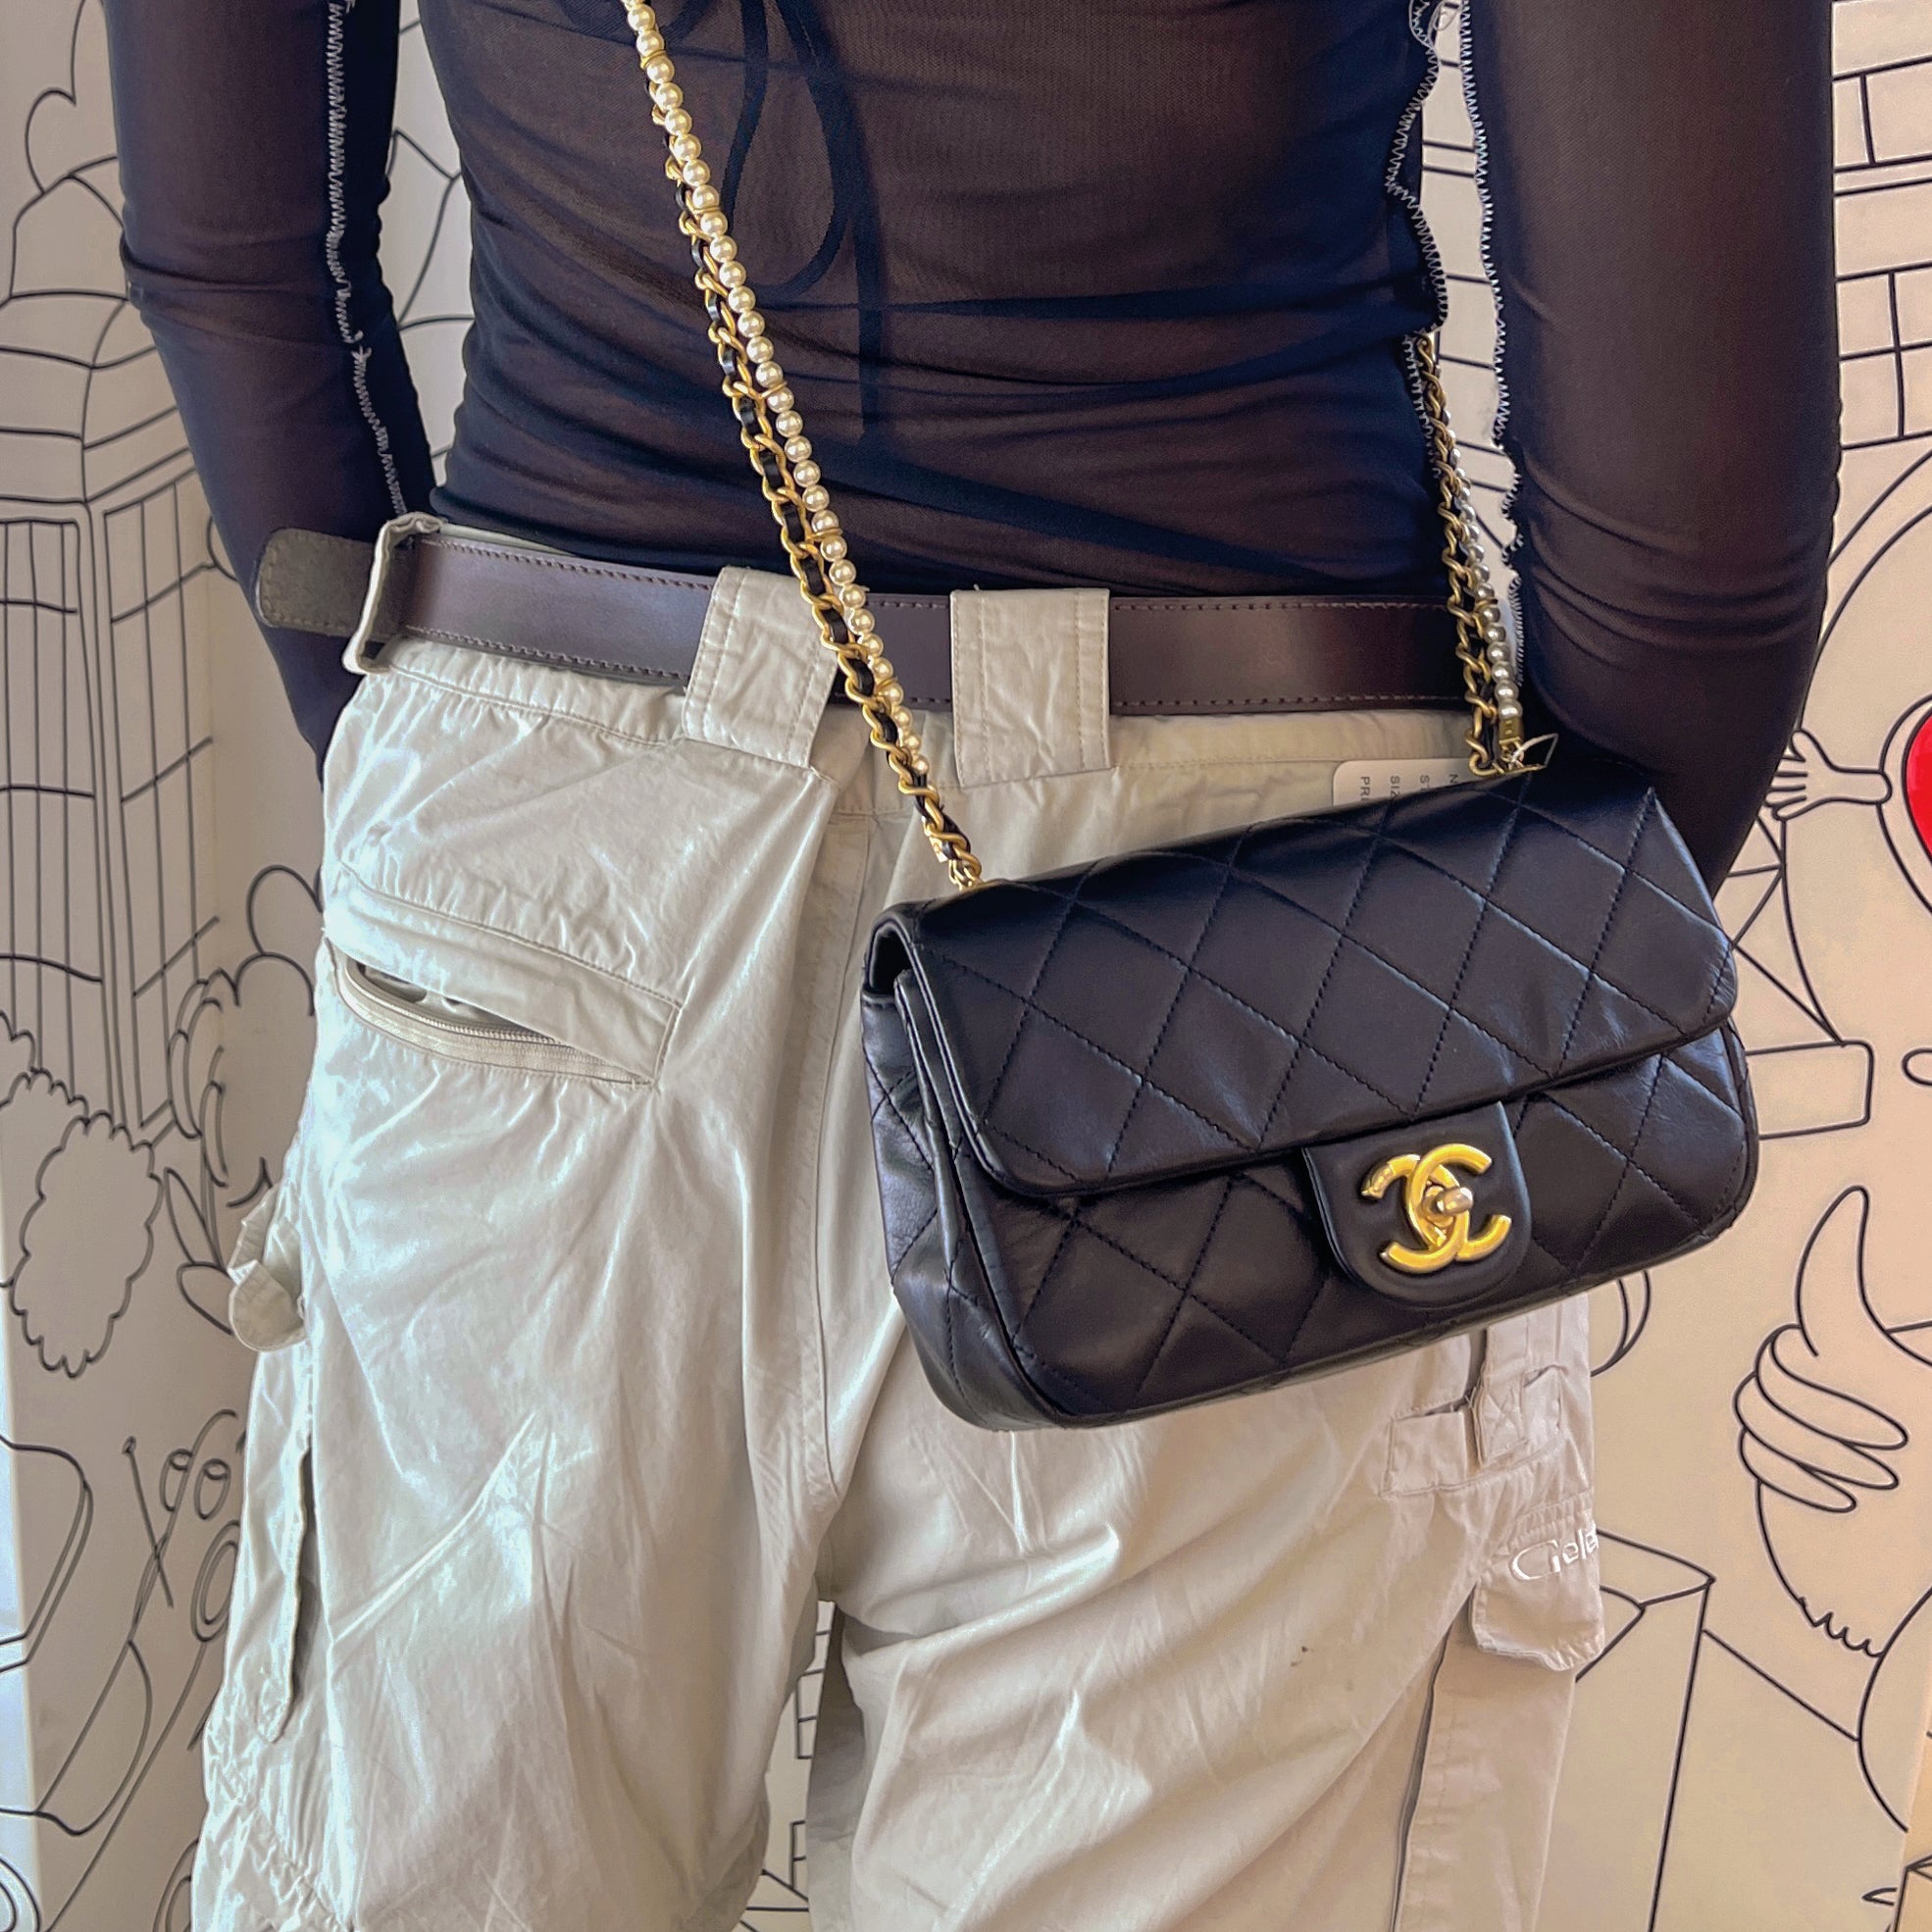 Loading  Chanel flap bag, Chanel bag classic, Chanel bag